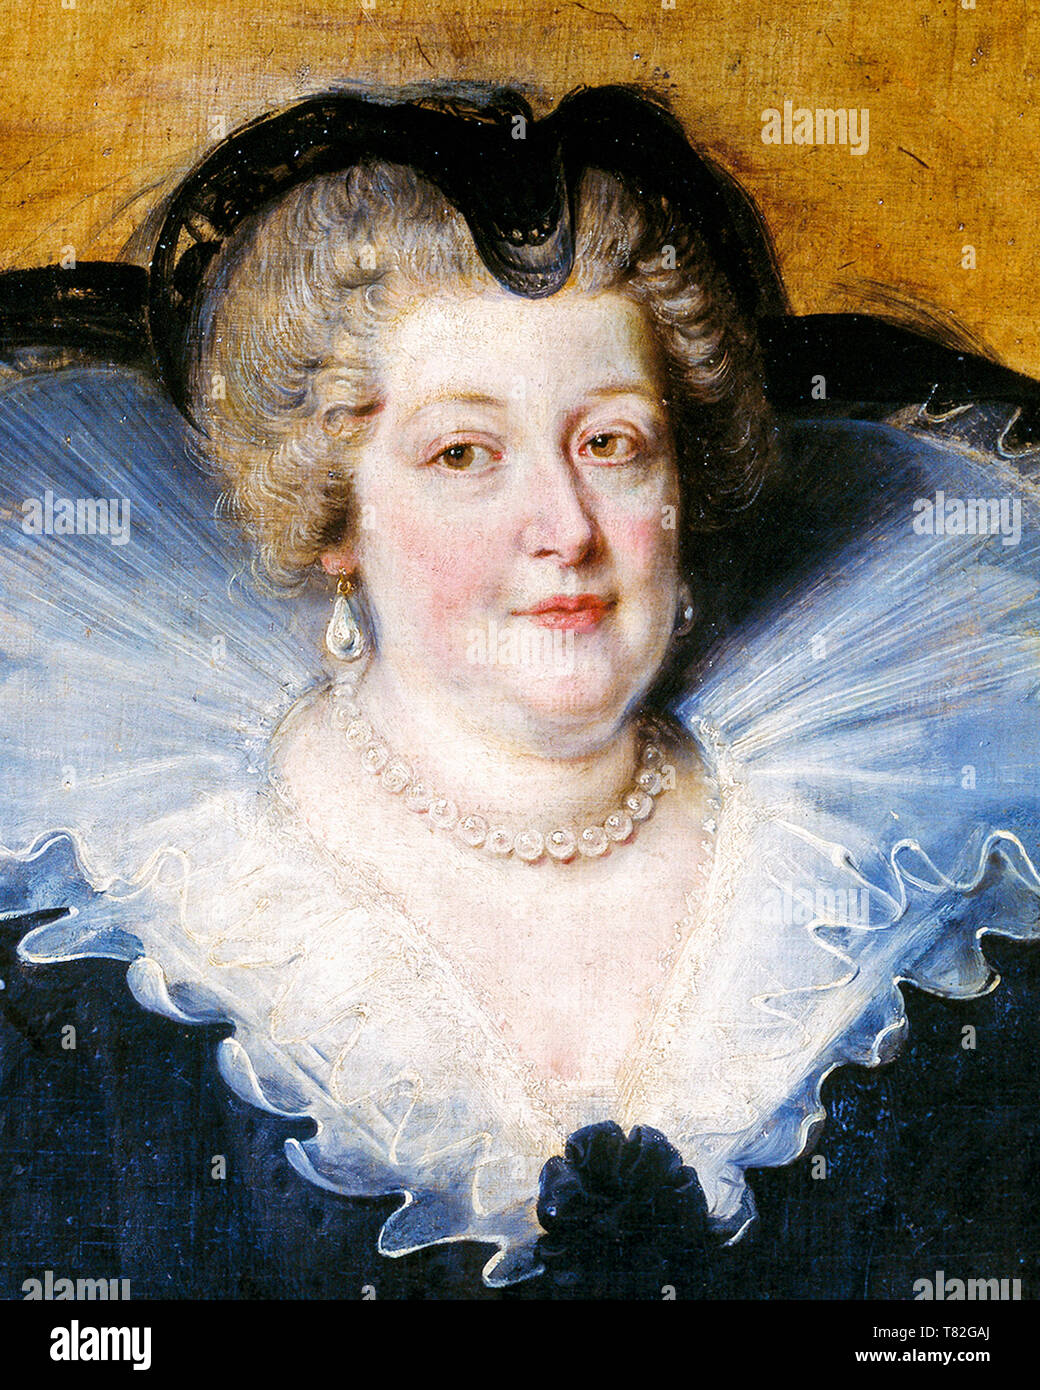 Marie de Medici (1575-1642), portrait (detail), Queen of France, by Peter Paul Rubens, 1622 Stock Photo